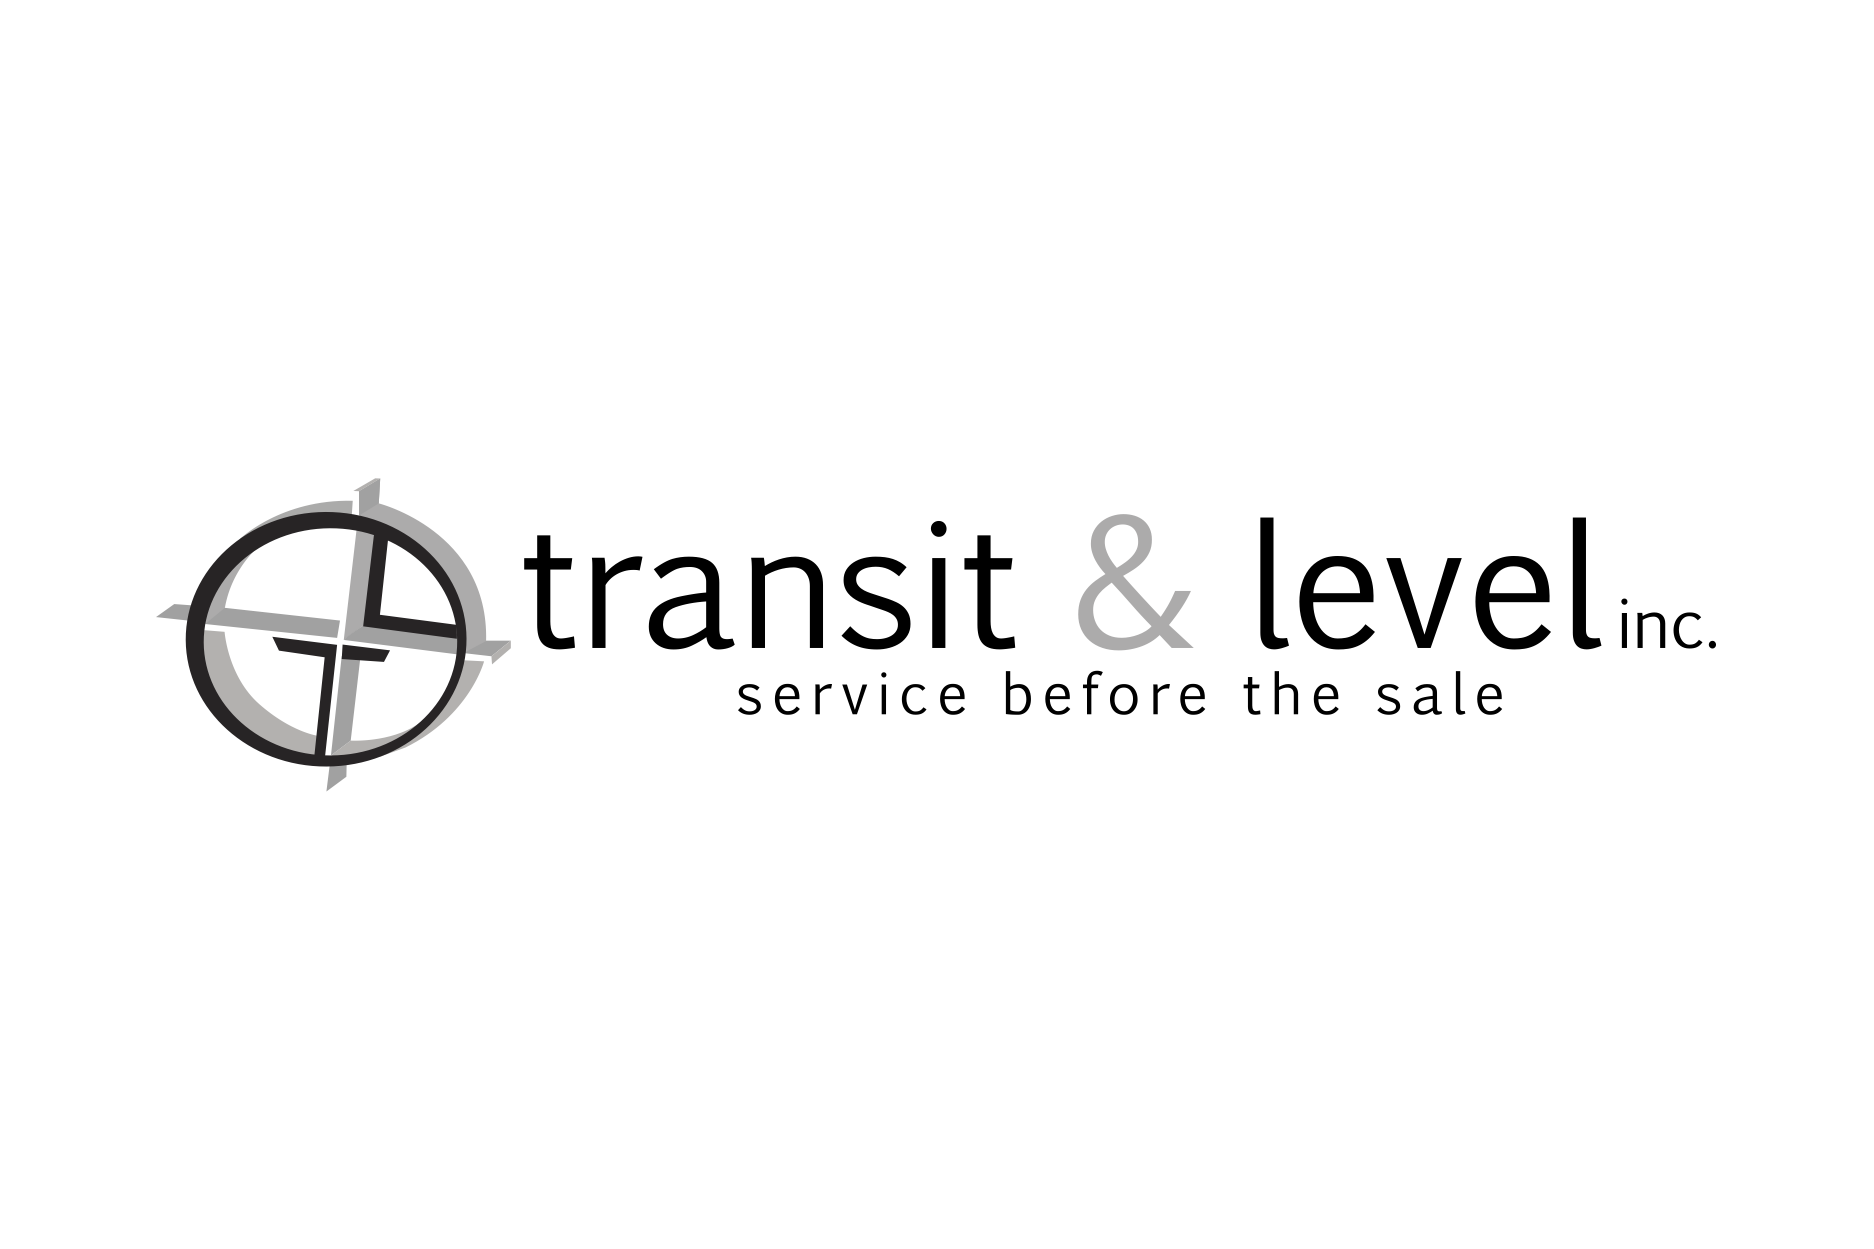 Transit & Level